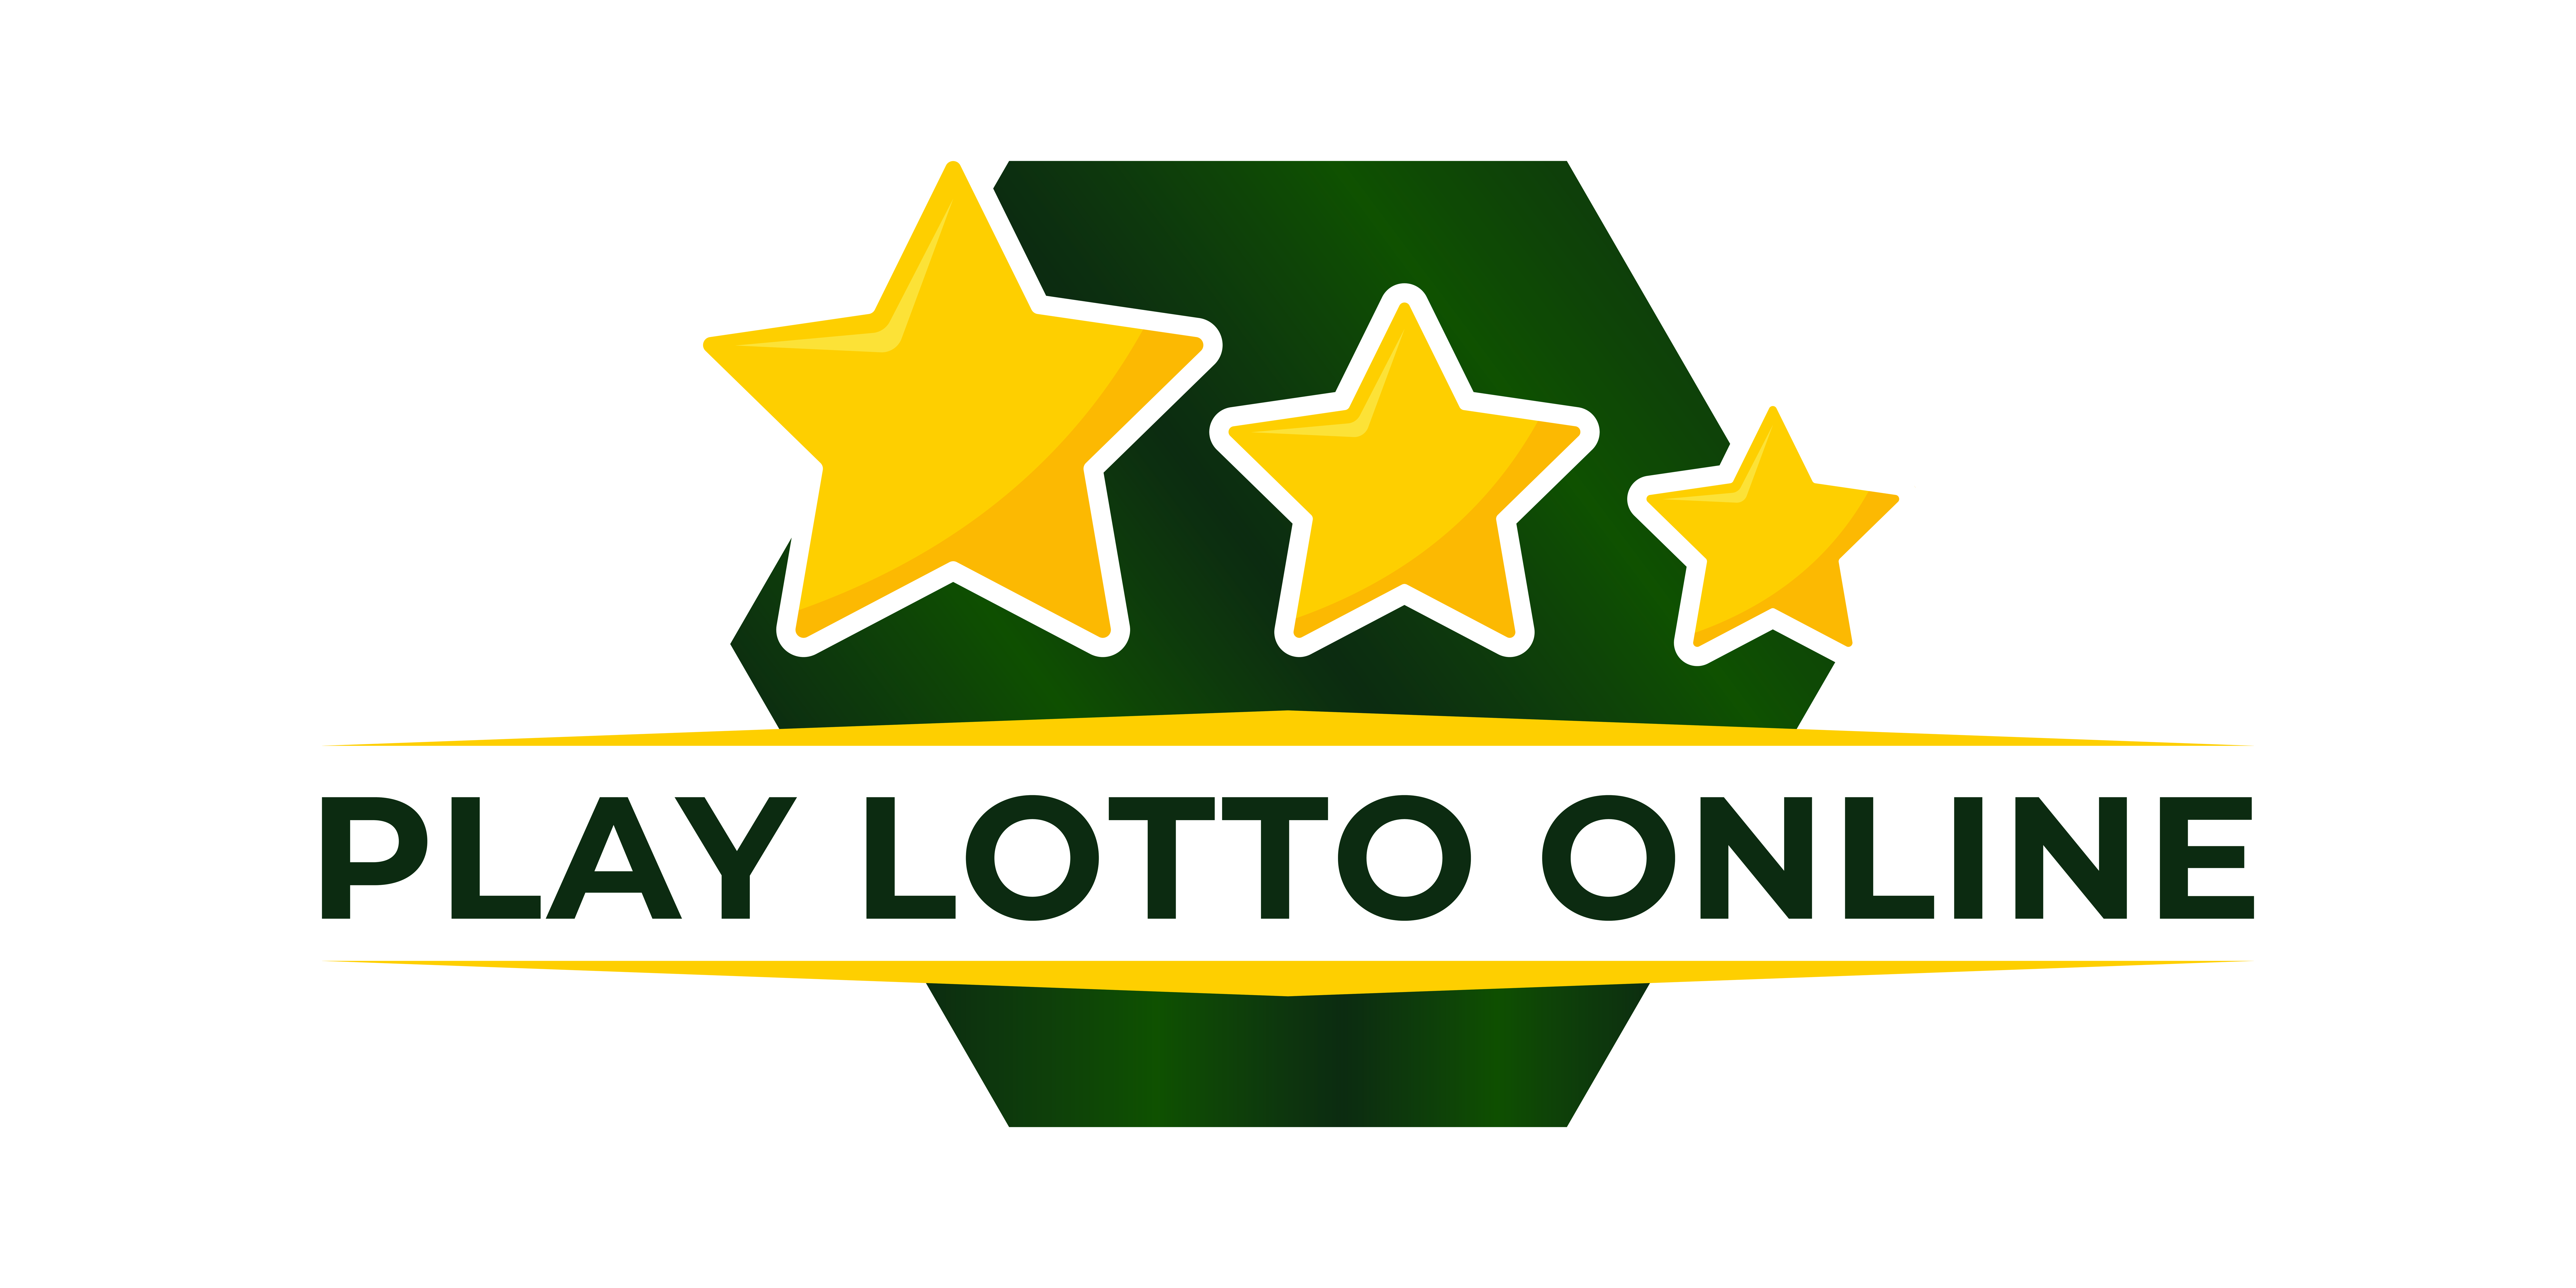 Jogue Lotto online

